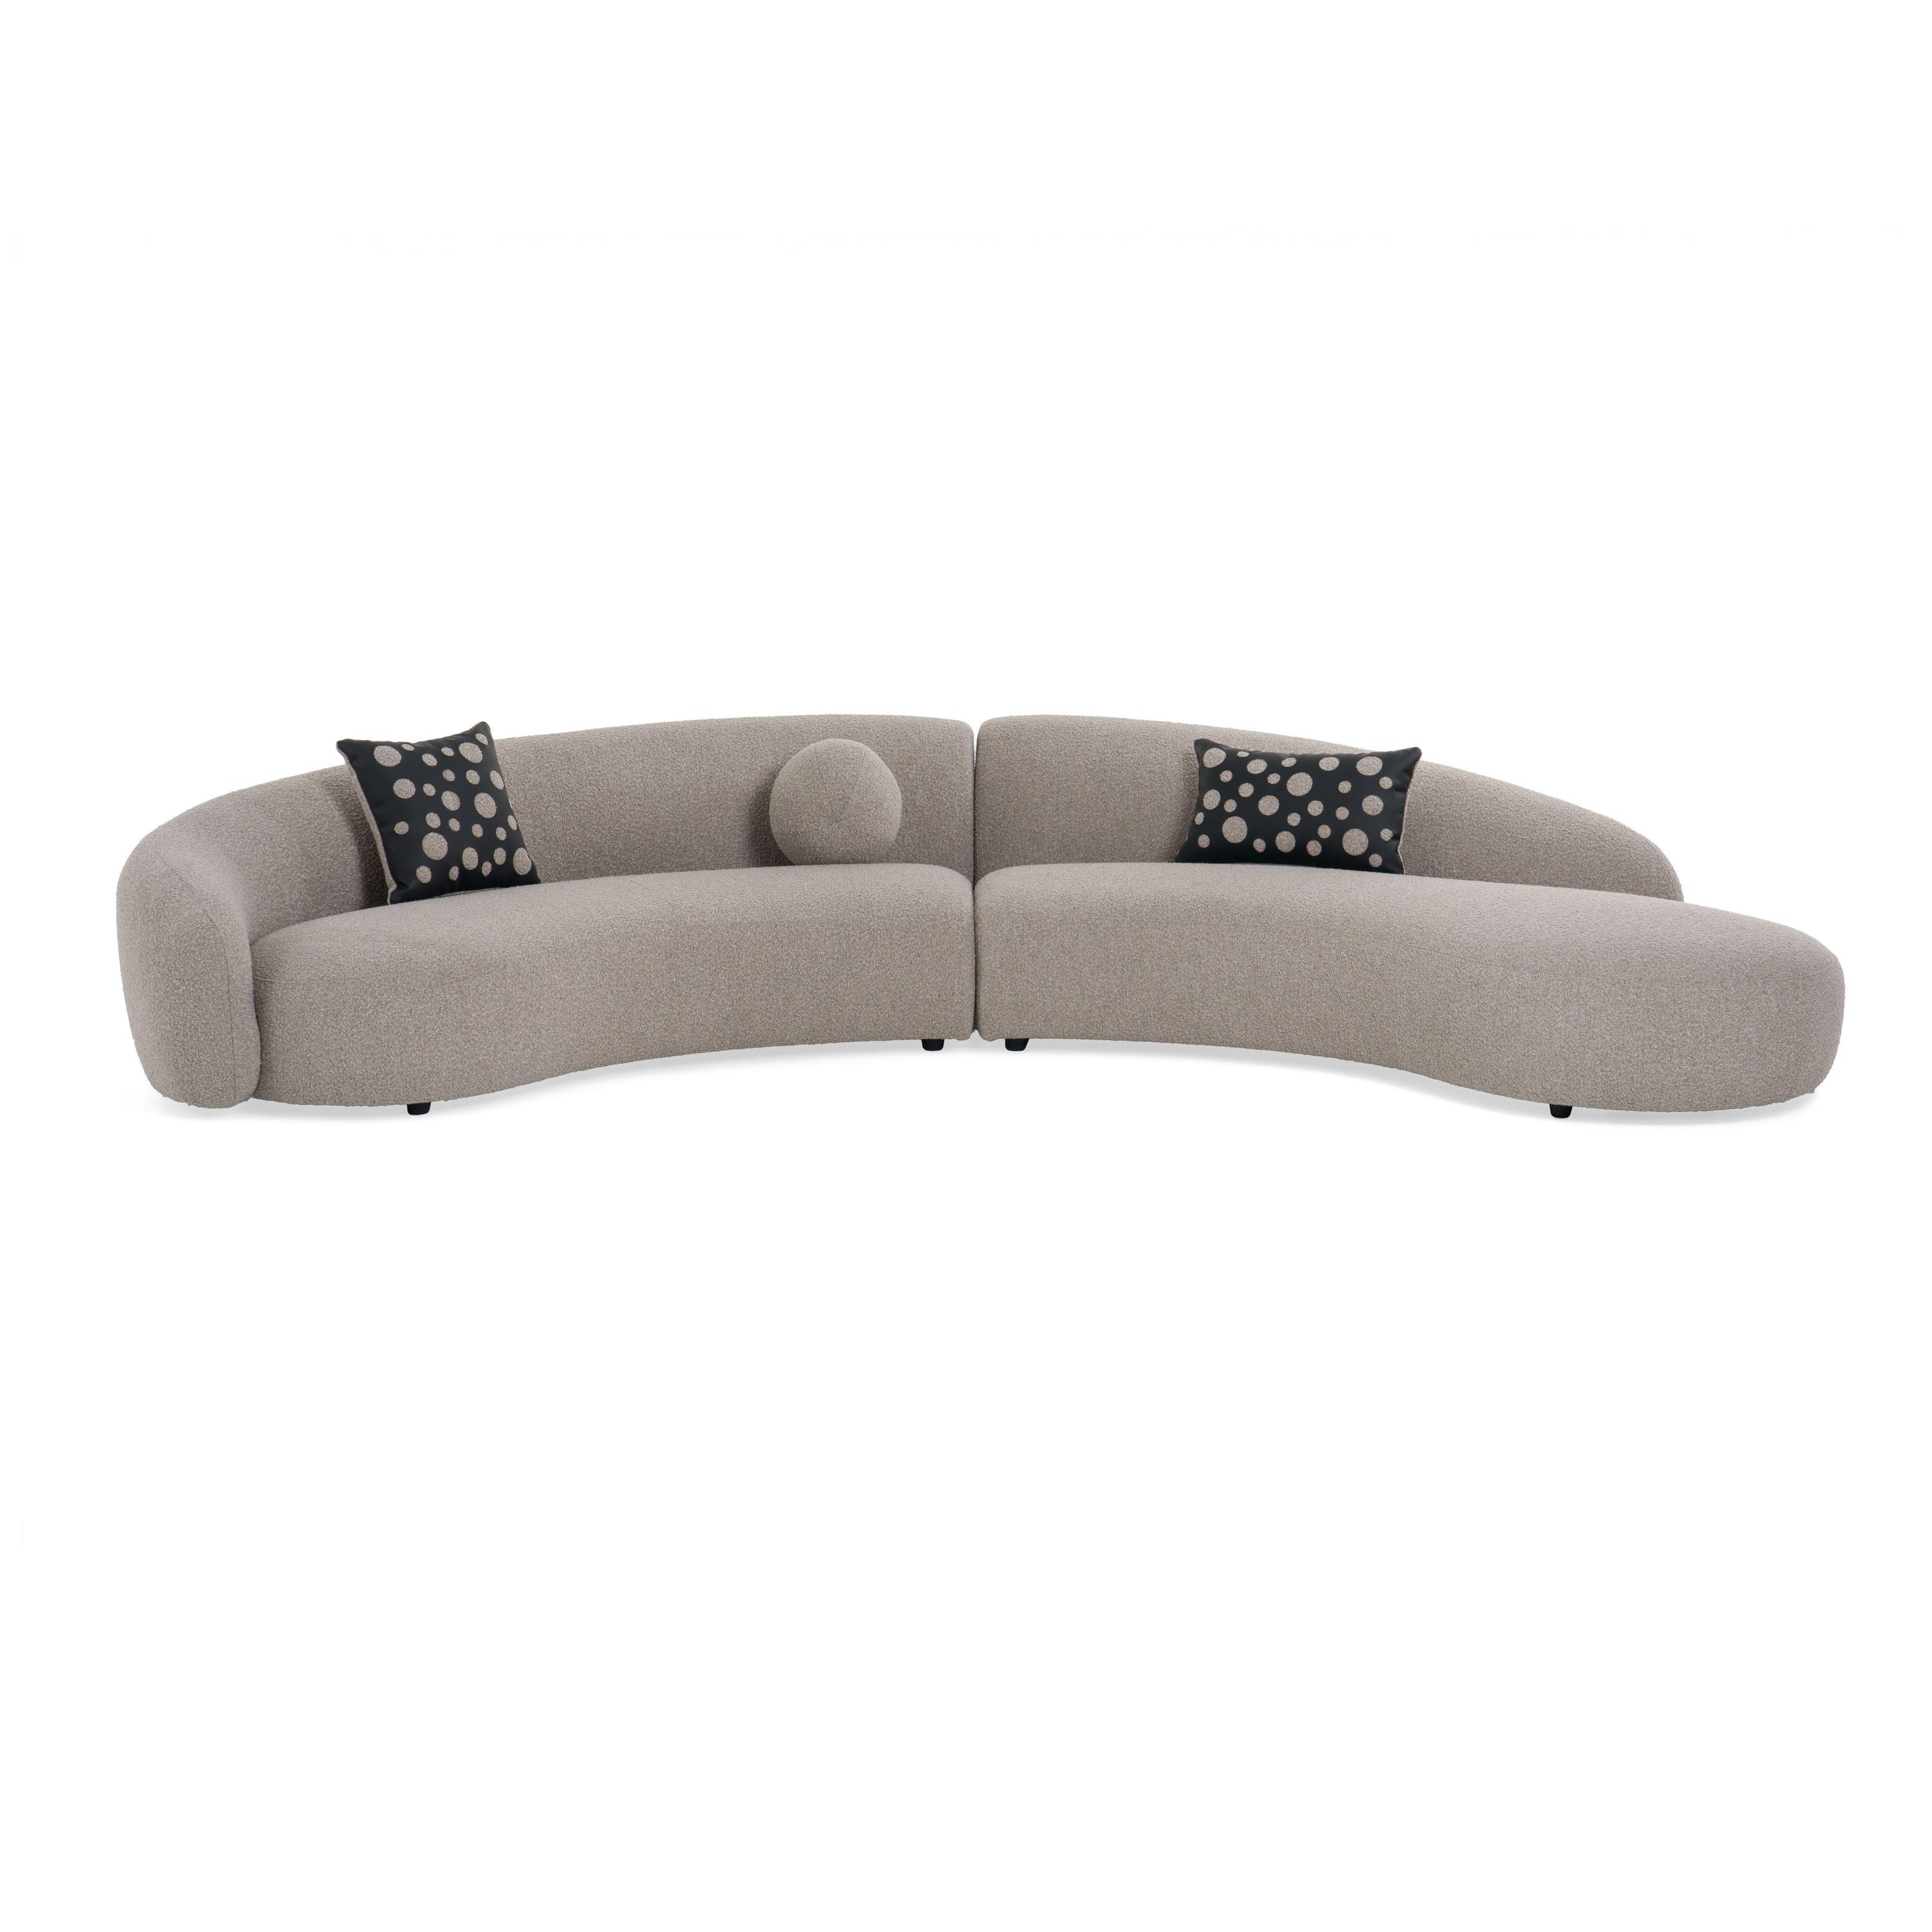 Contemporary, Modern Sectional Sofa Allis Sectional Sofa VGOD-ZW-21032-GRY-SECT VGOD-ZW-21032-GRY-SECT in Gray, Black Fabric